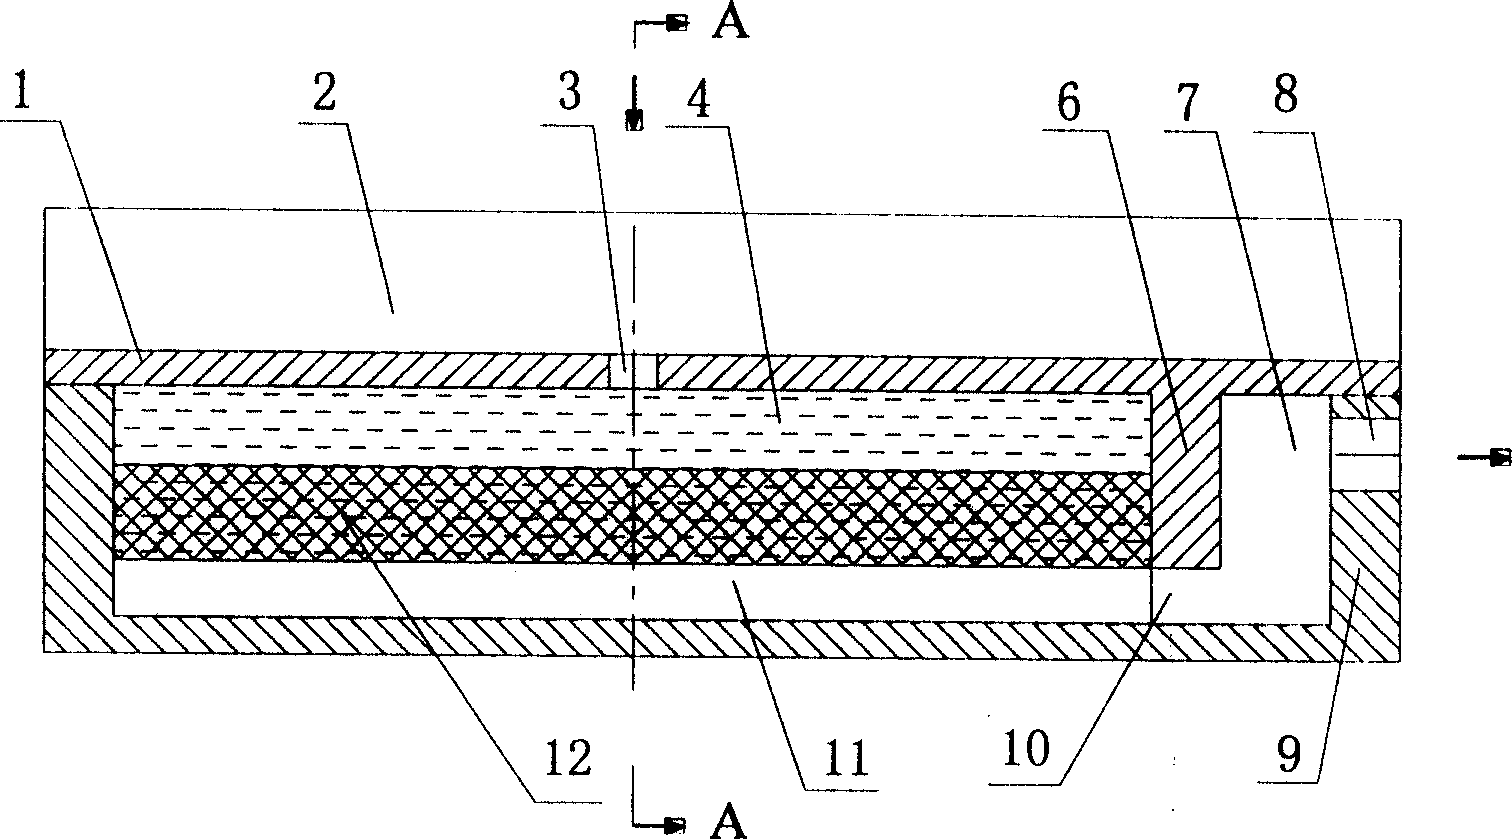 Plane capillary core evaporimeter with fin for CPL